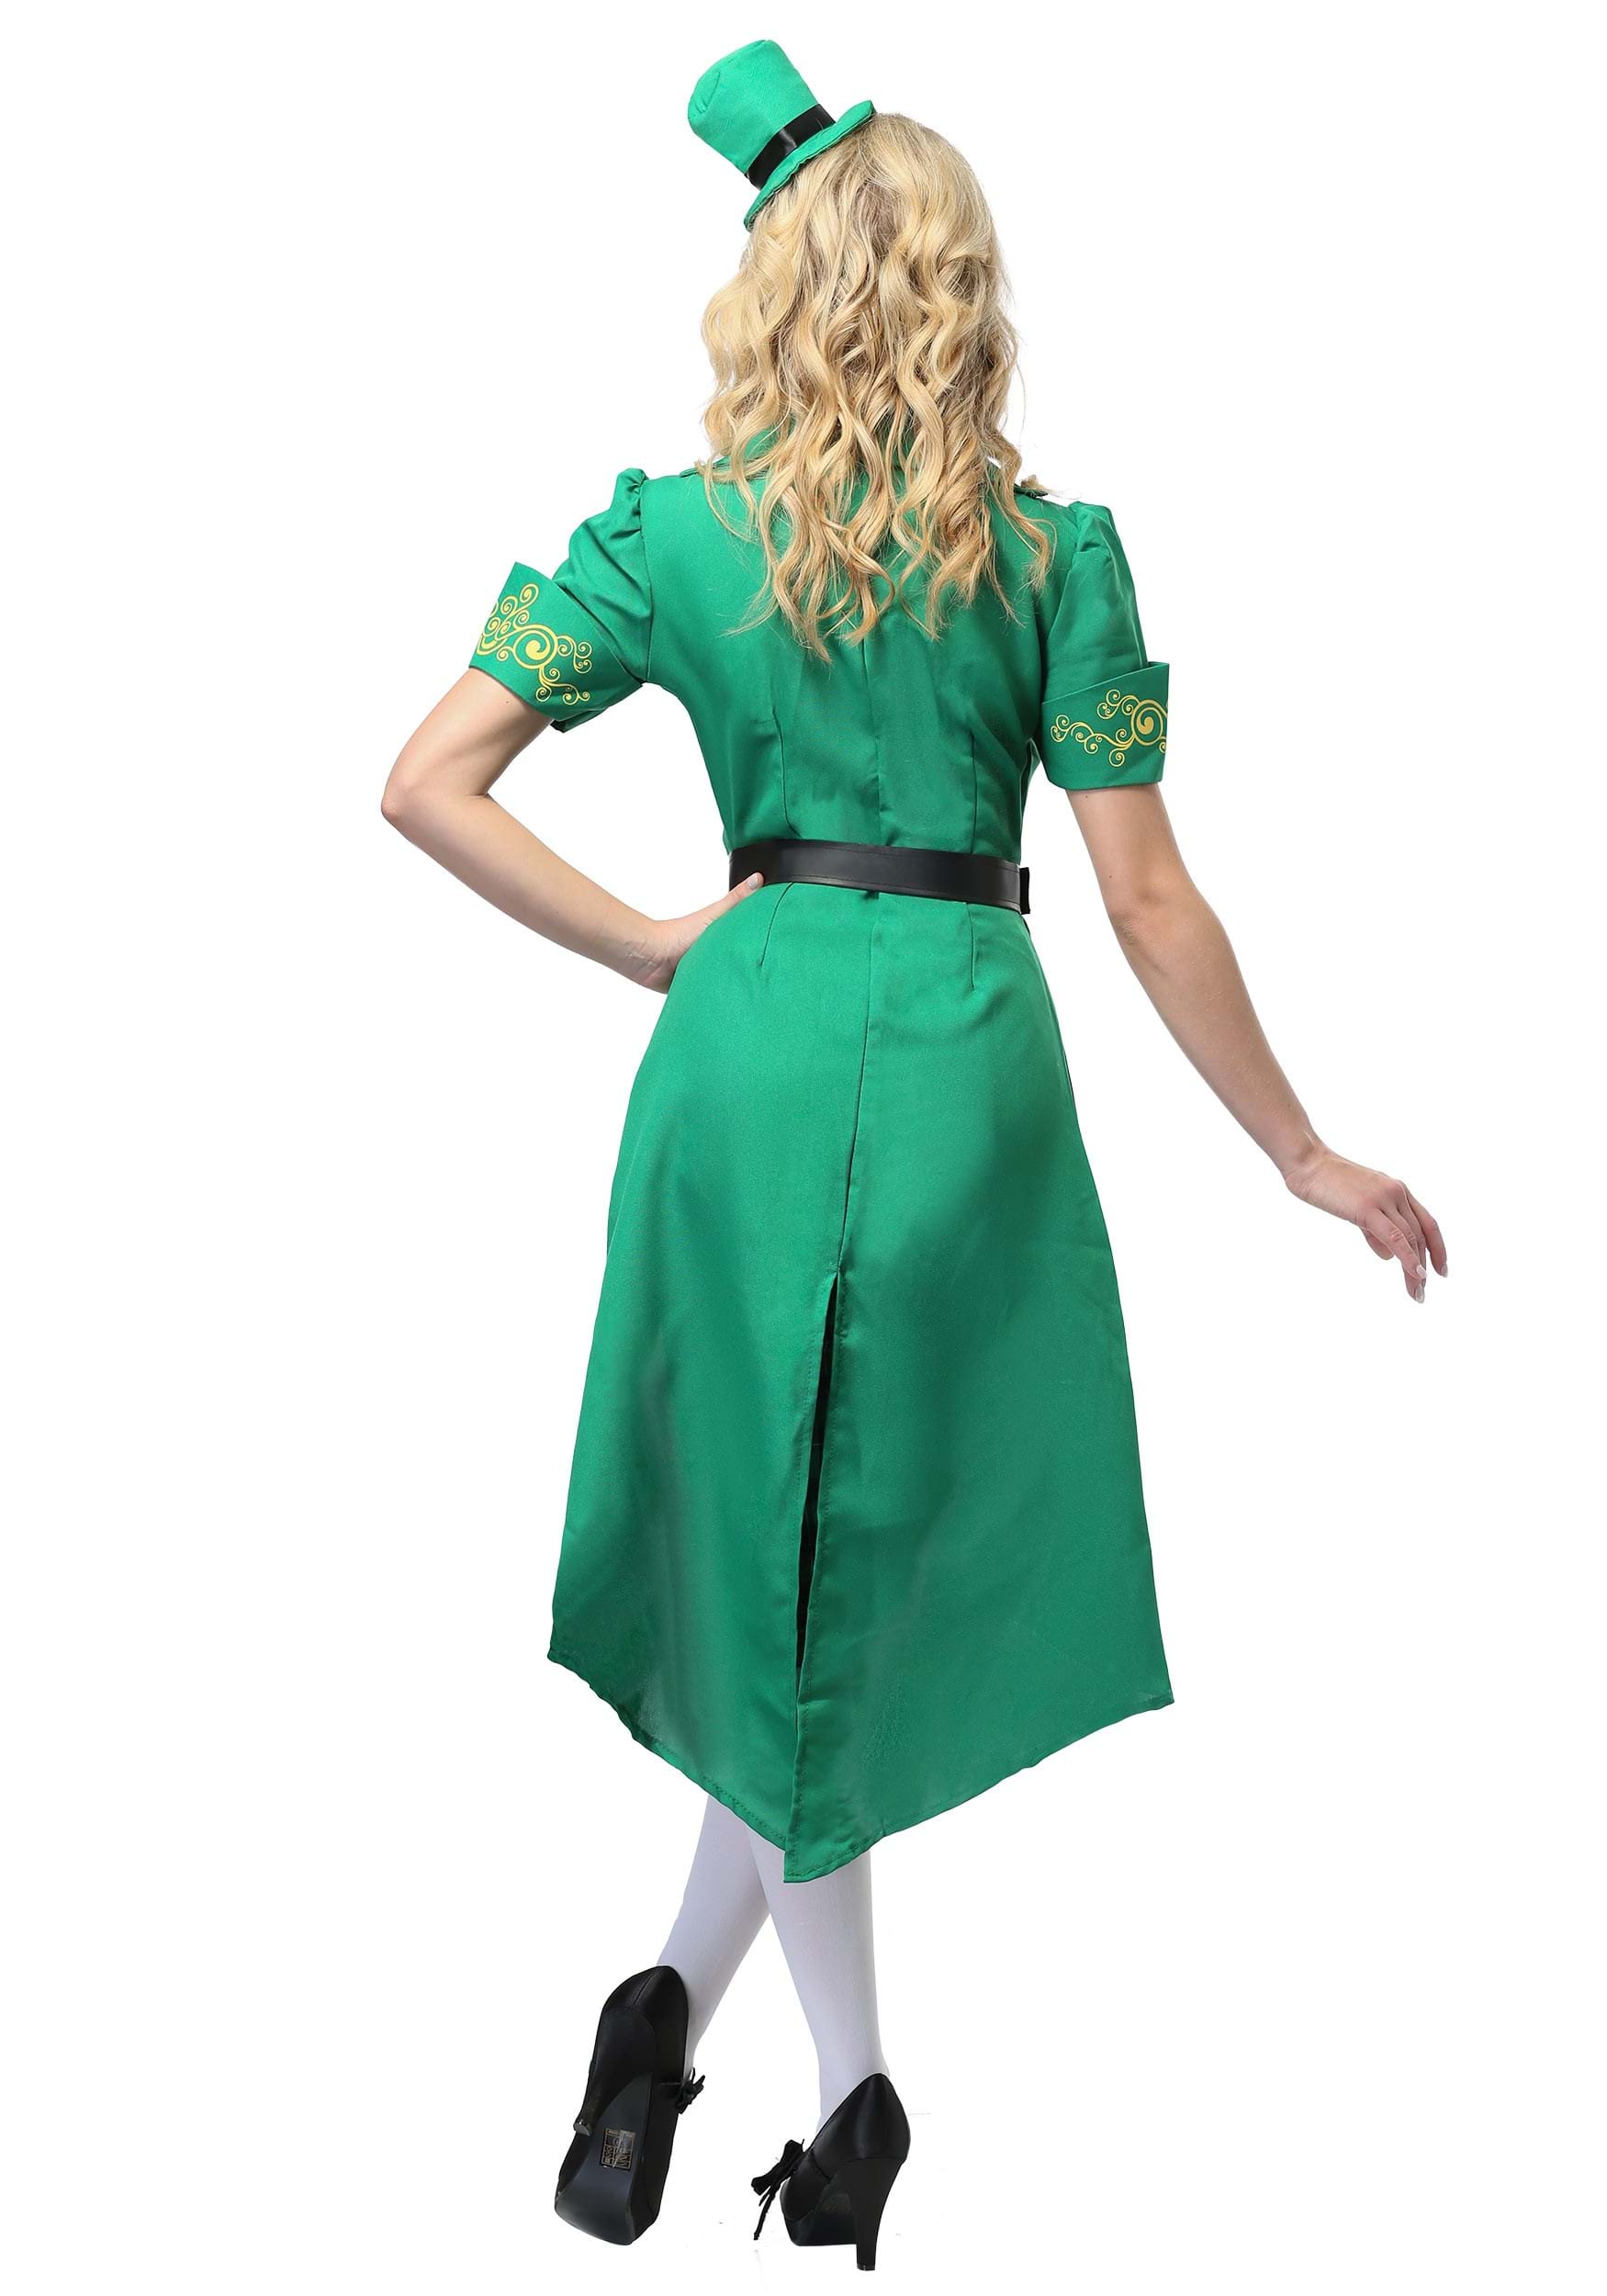 Charming Leprechaun Fancy Dress Costume For Women , St. Patrick's Day Fancy Dress Costumes